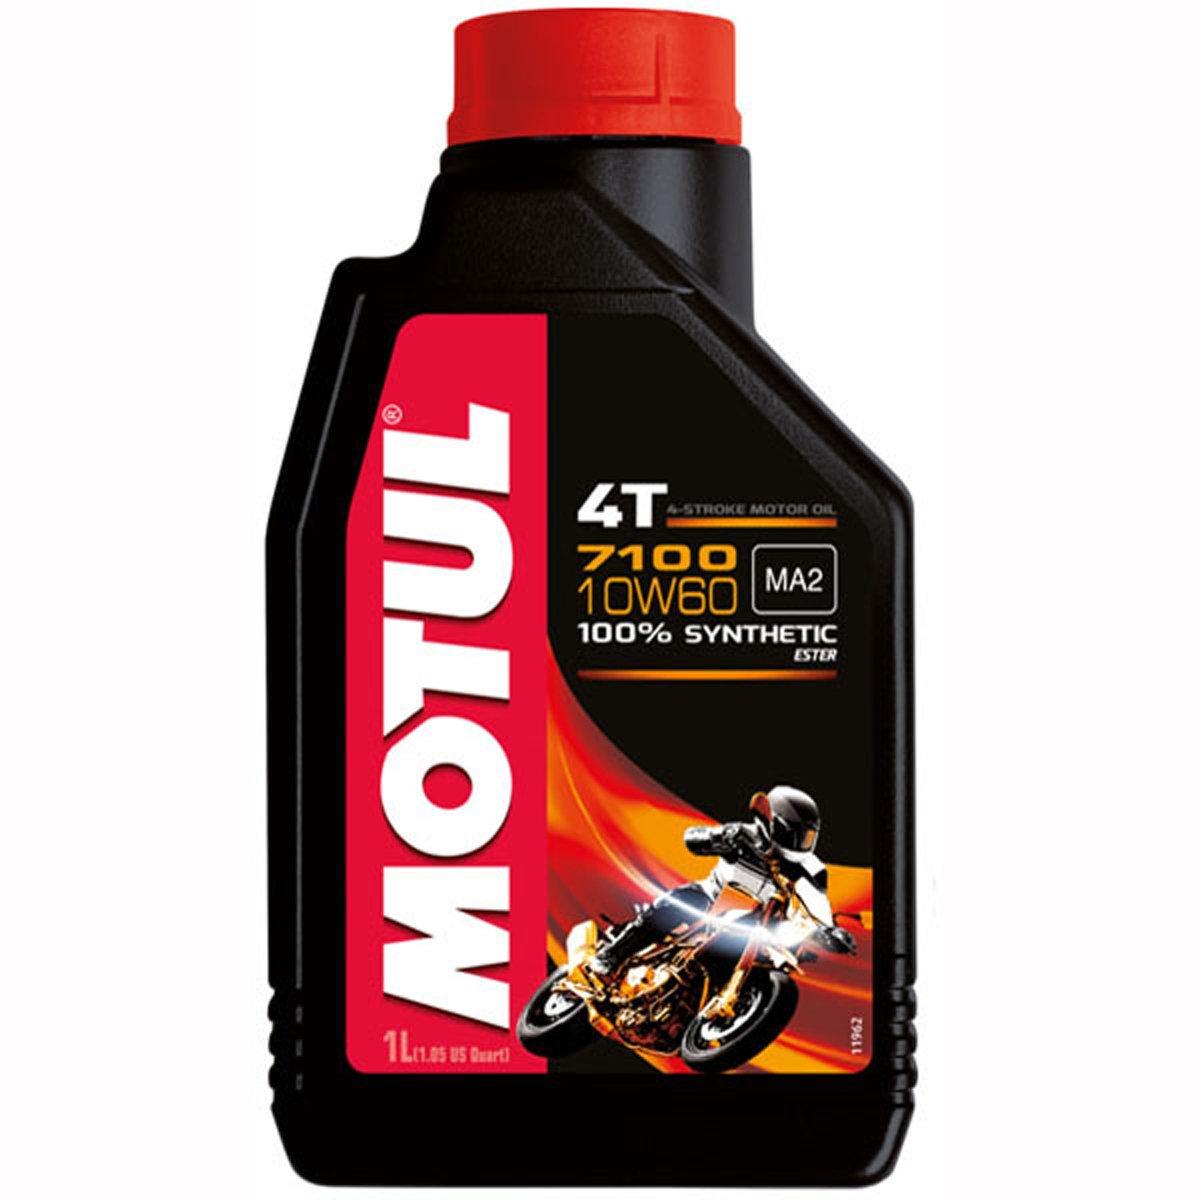 Motul Fully Synthetic 7100 10W60 4T Oil - Black - Browse our range of Care: Oils & Liquids - getgearedshop 